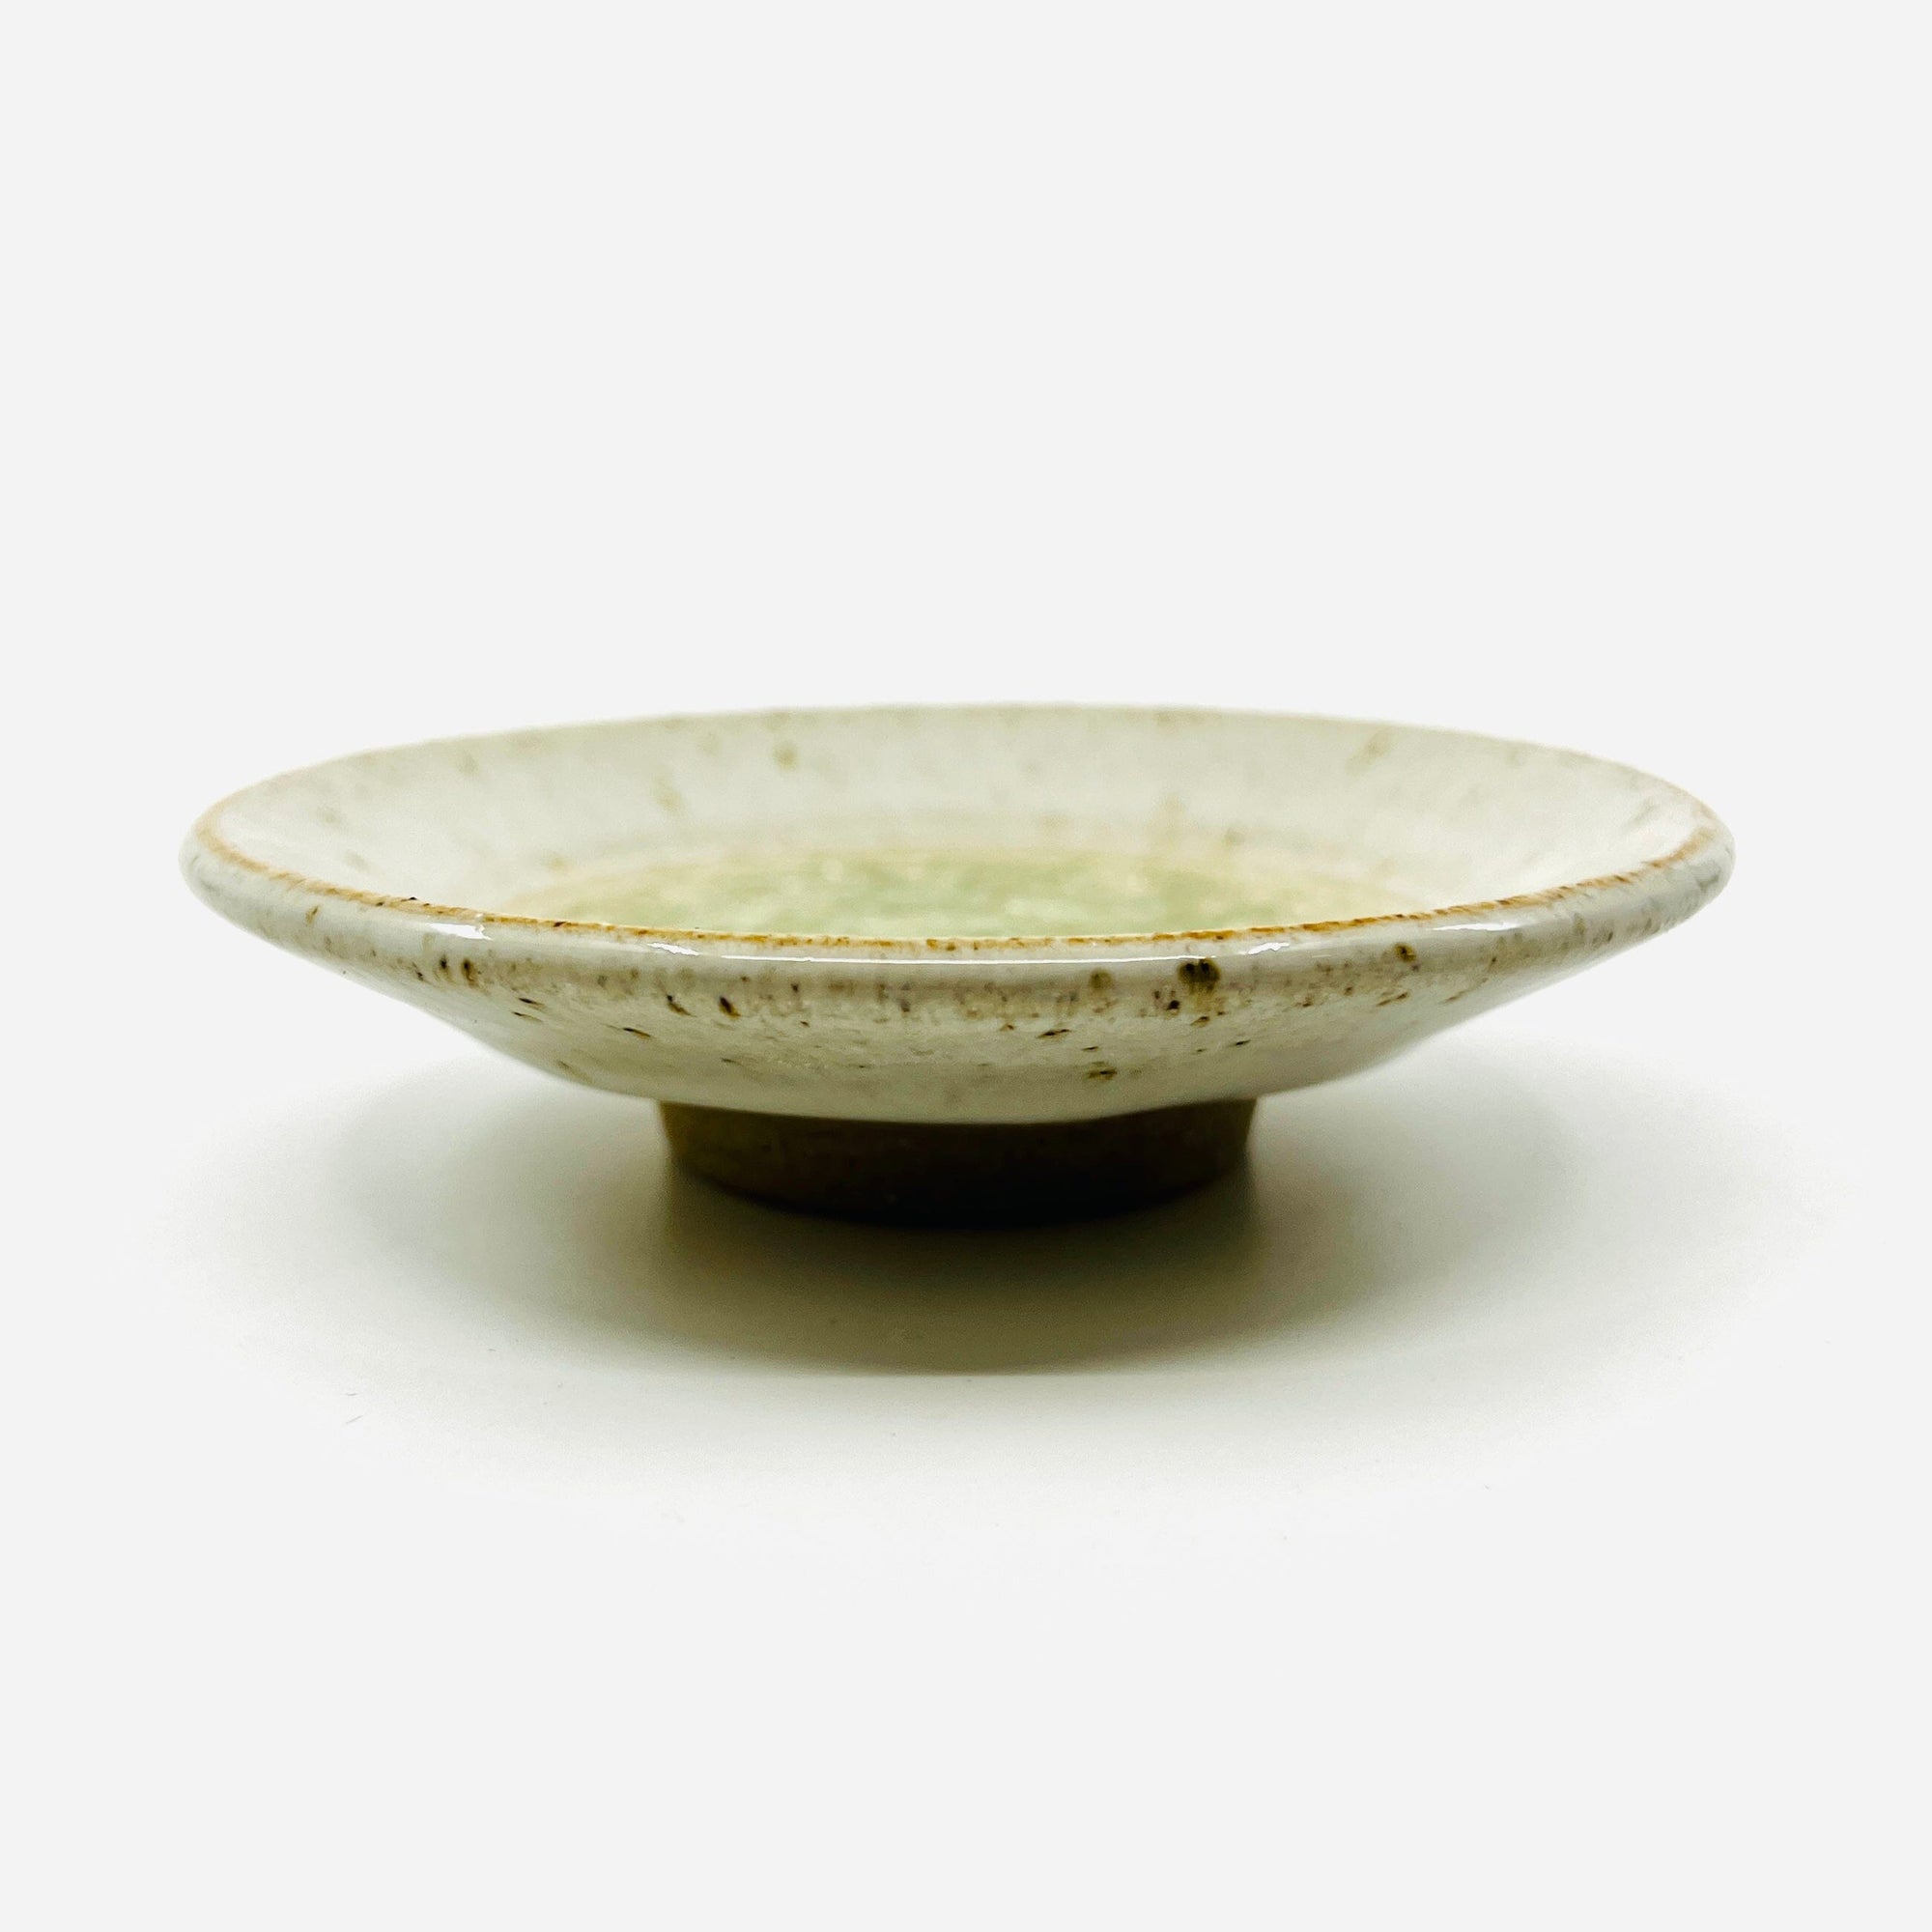 Small Ceramic and Glass Dish, Sand Decor Dock 6 